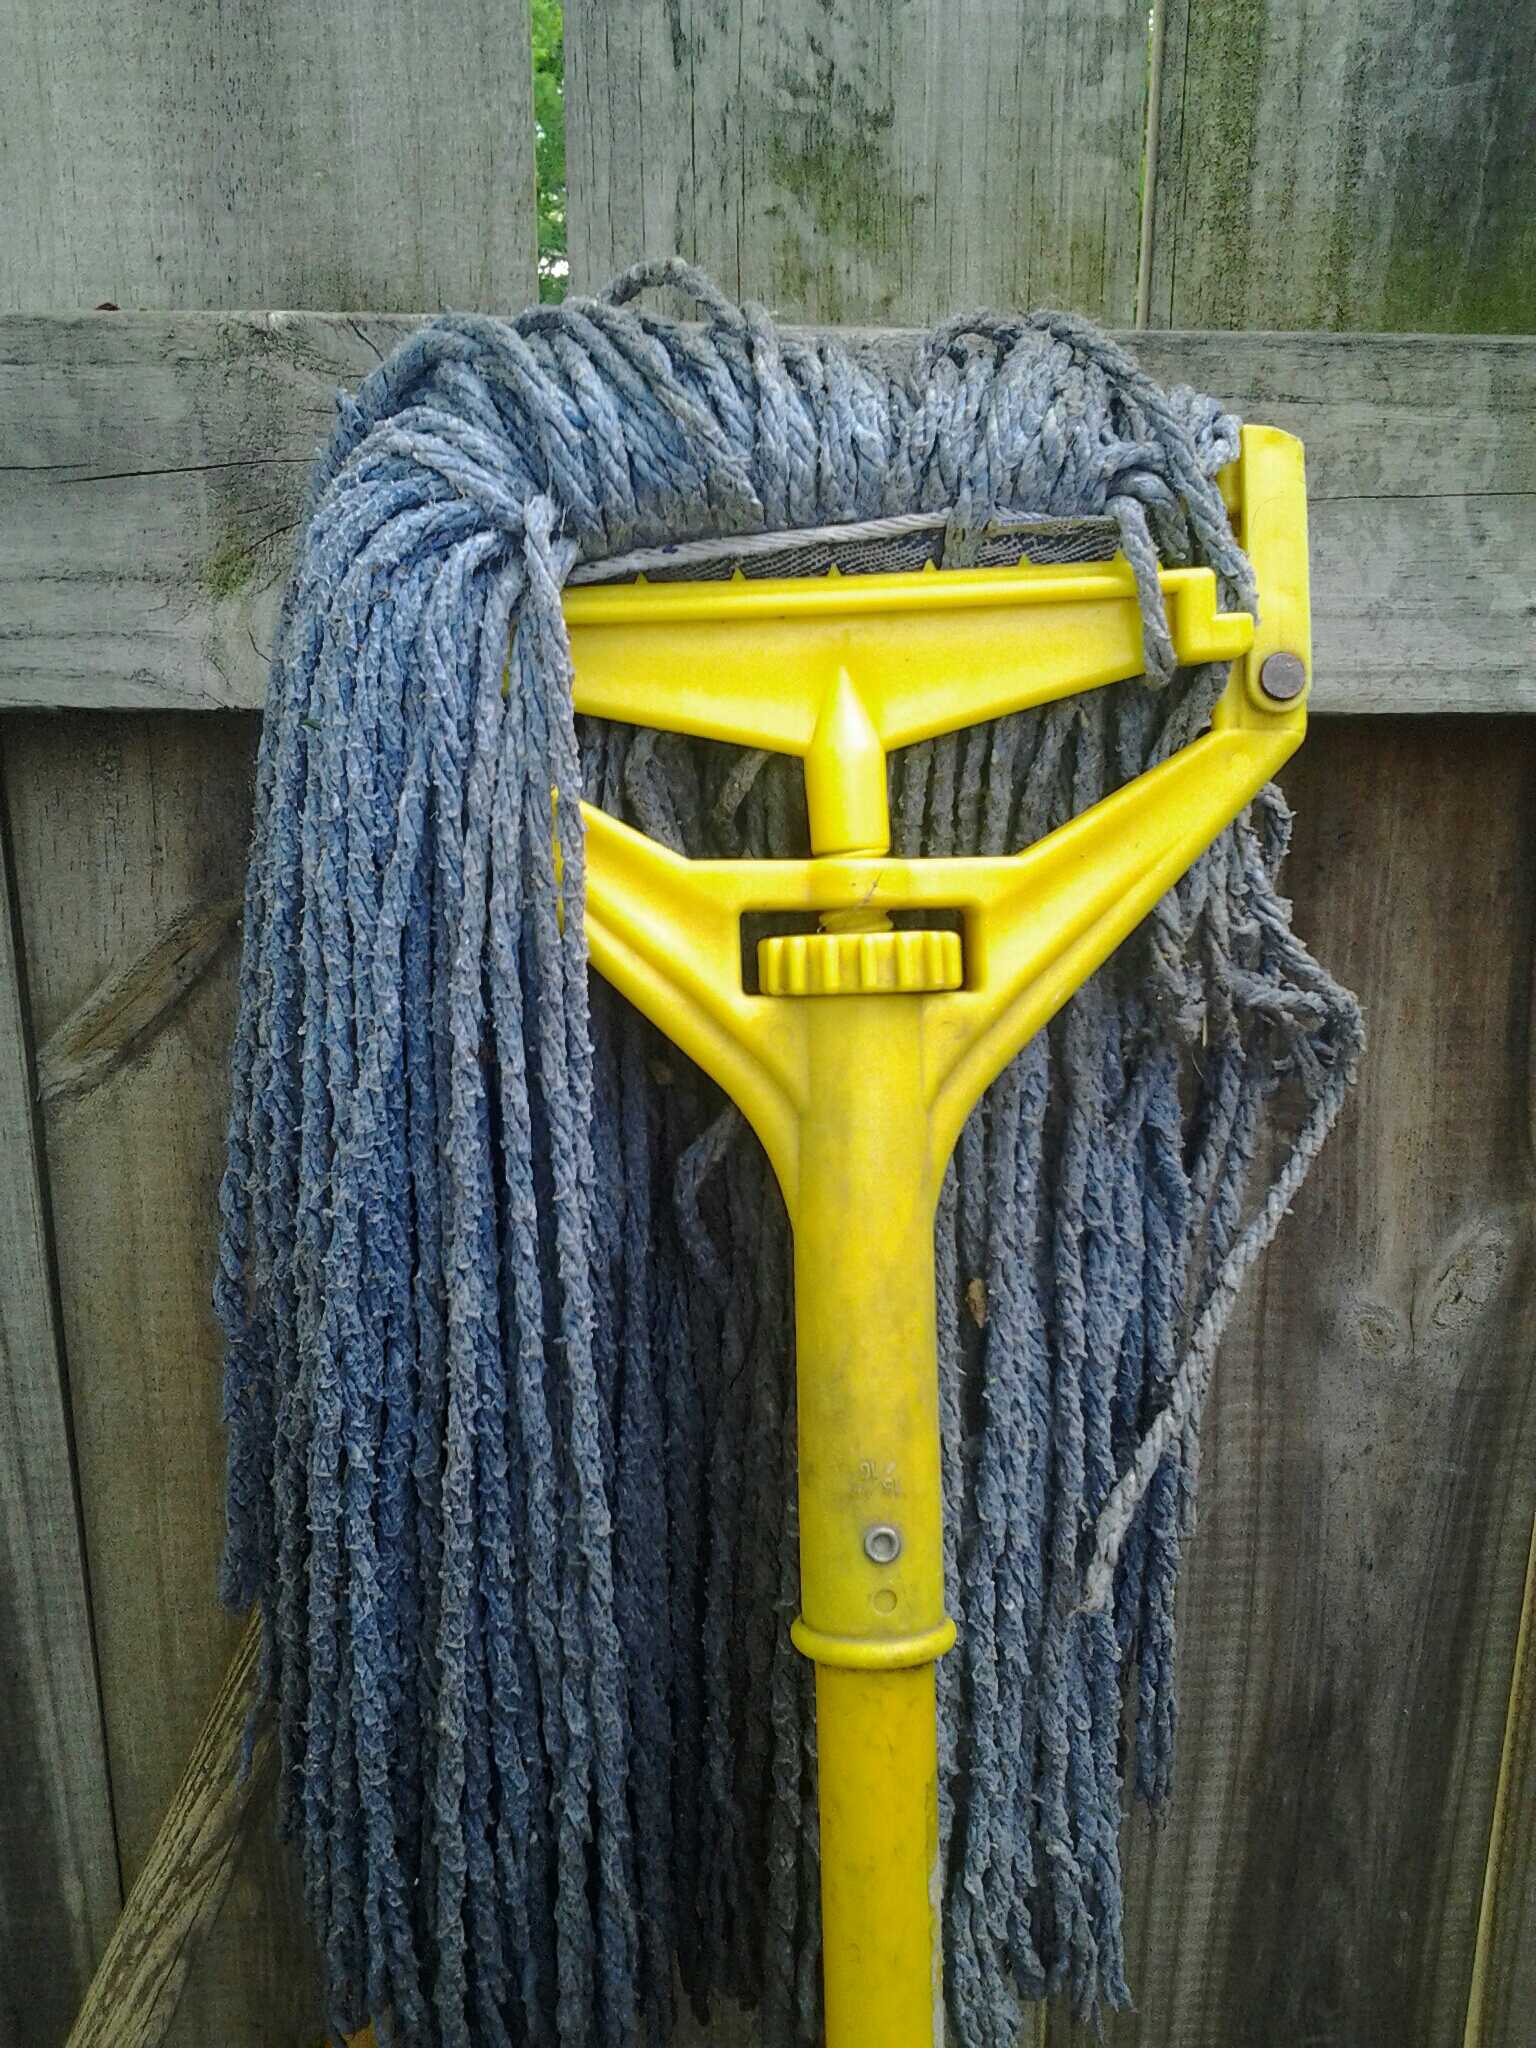 mop that looks like the predator!